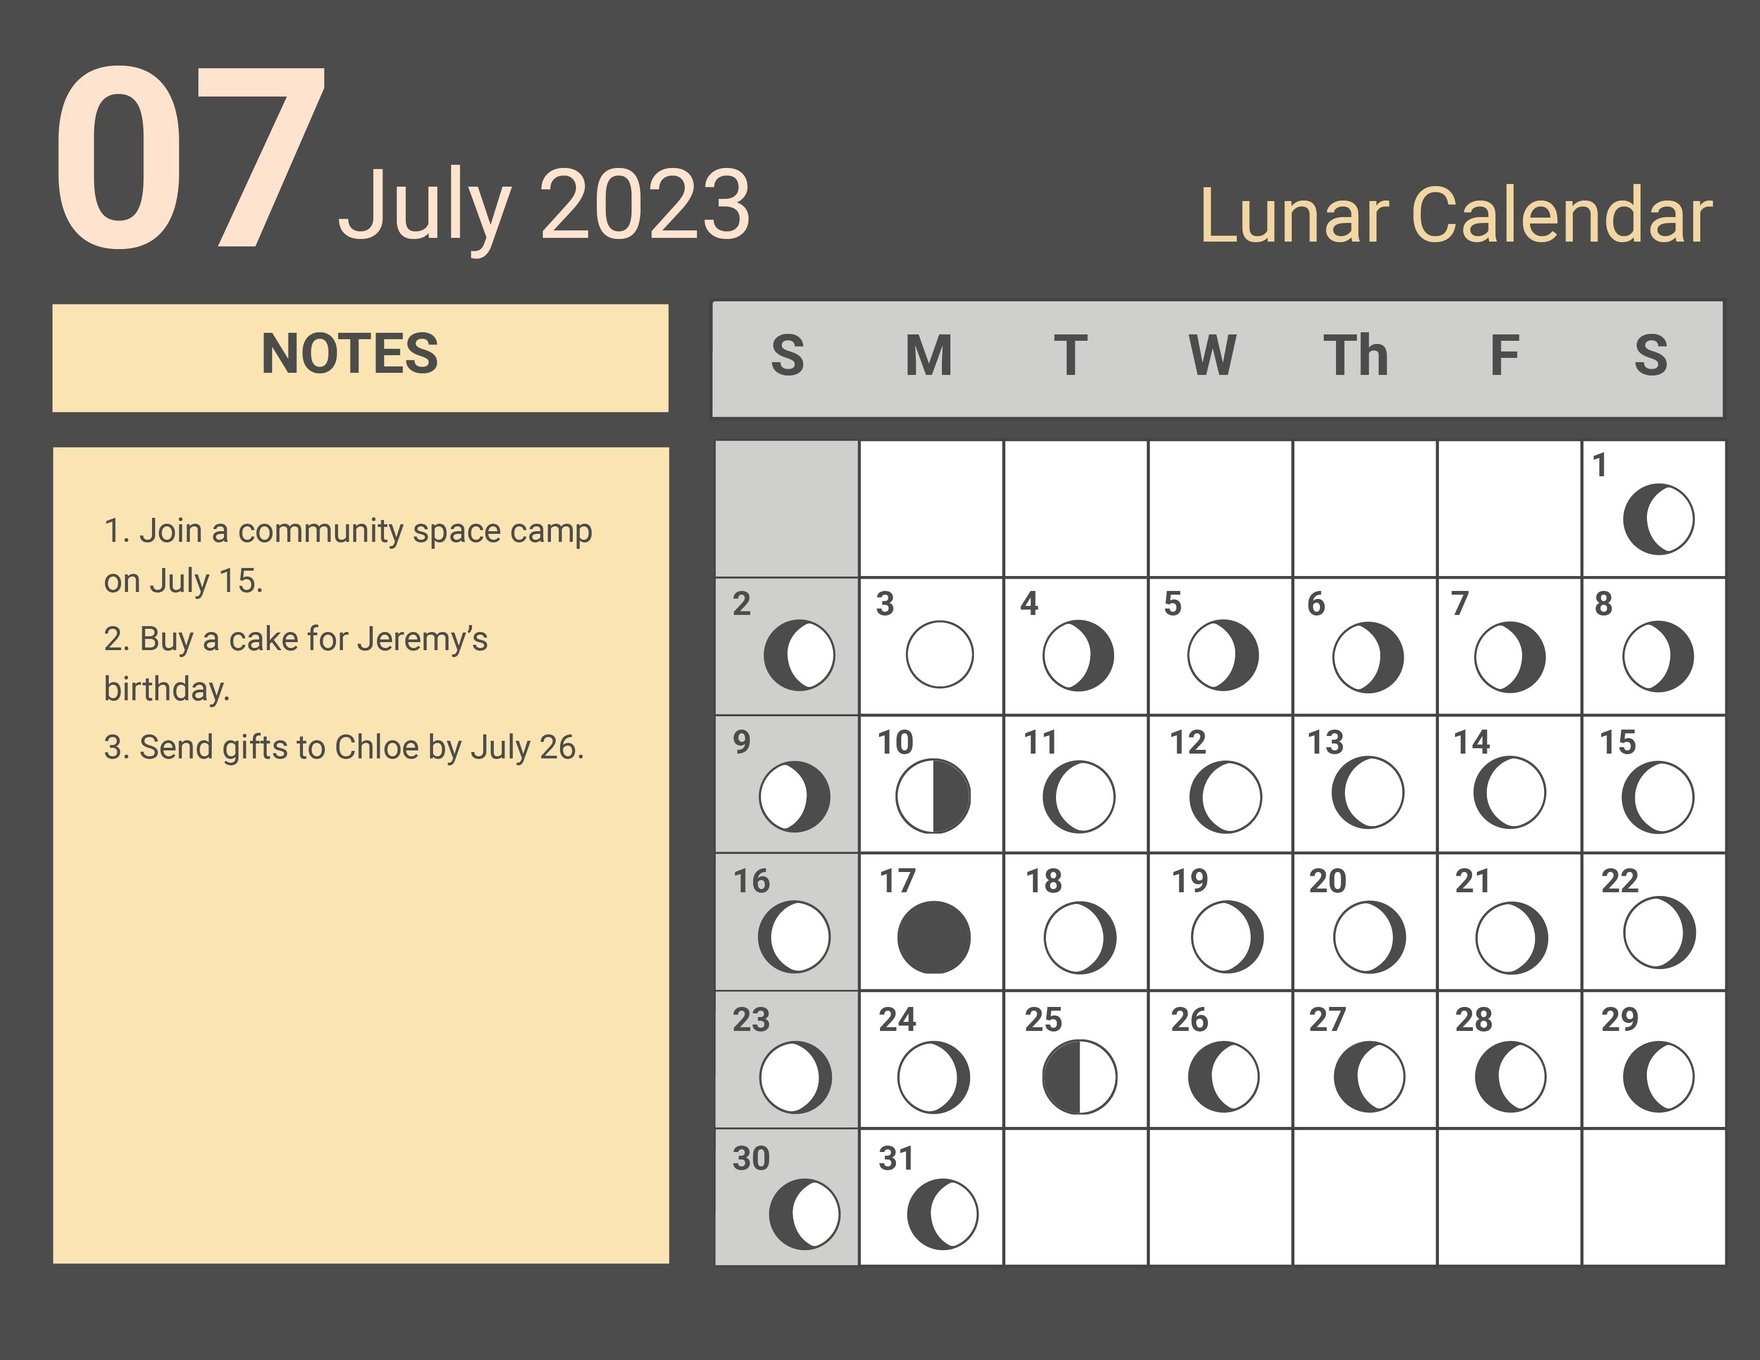 Lunar Calendar July 2023